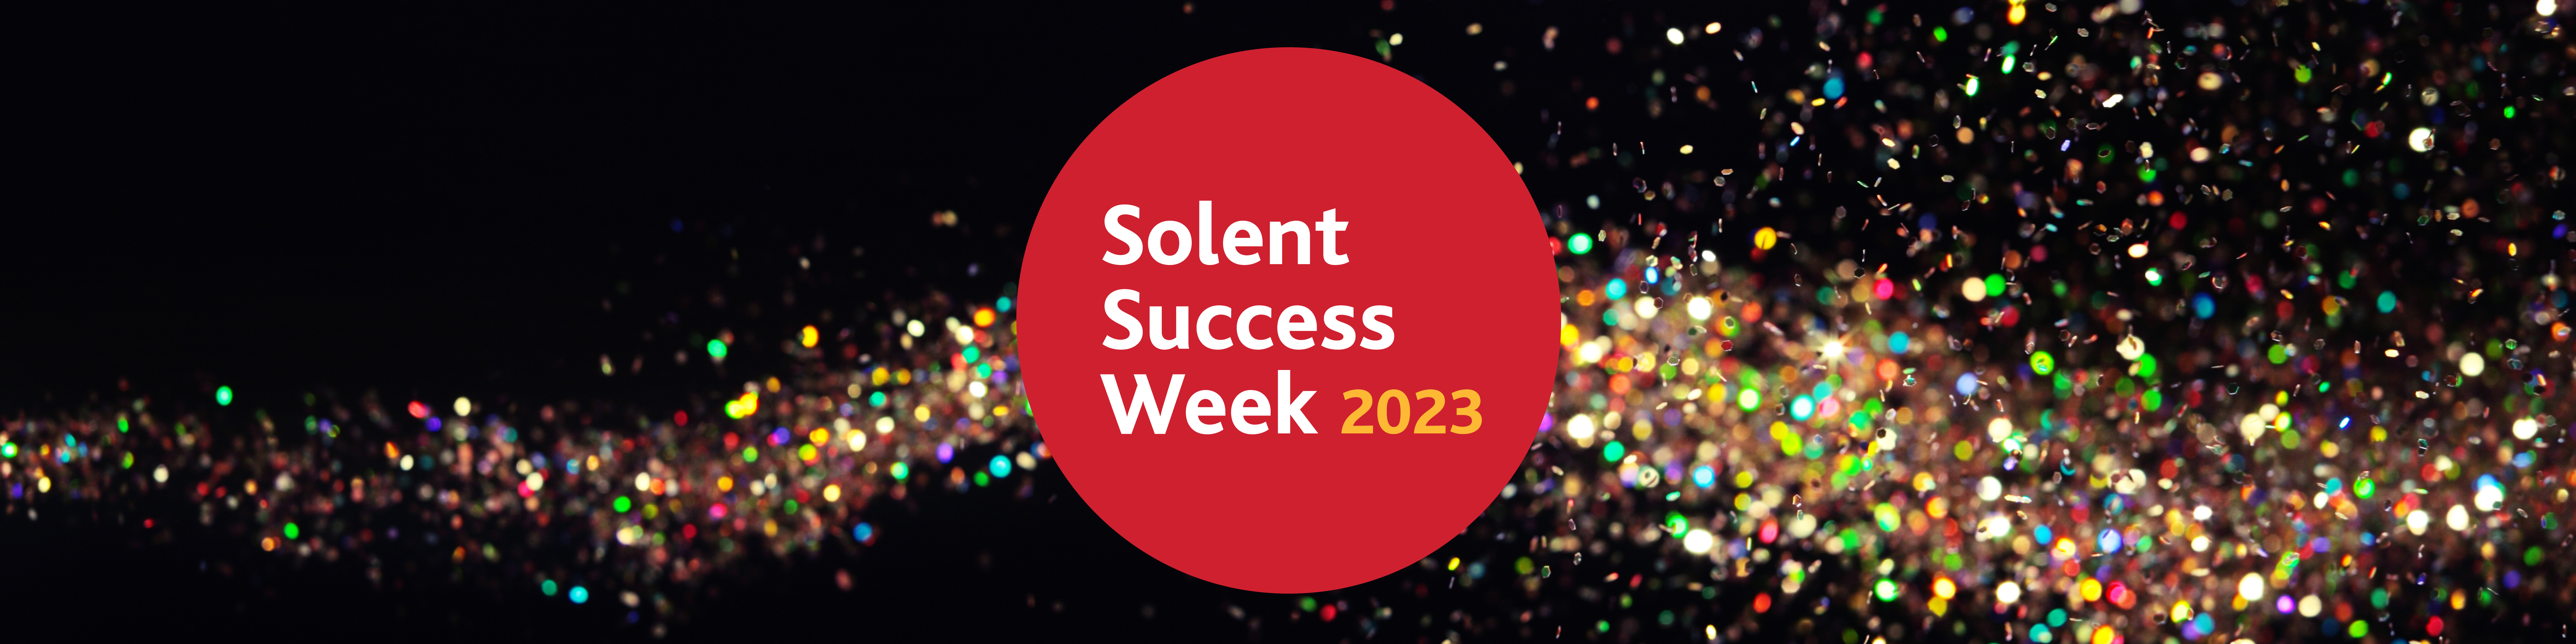 Solent Success Week banner